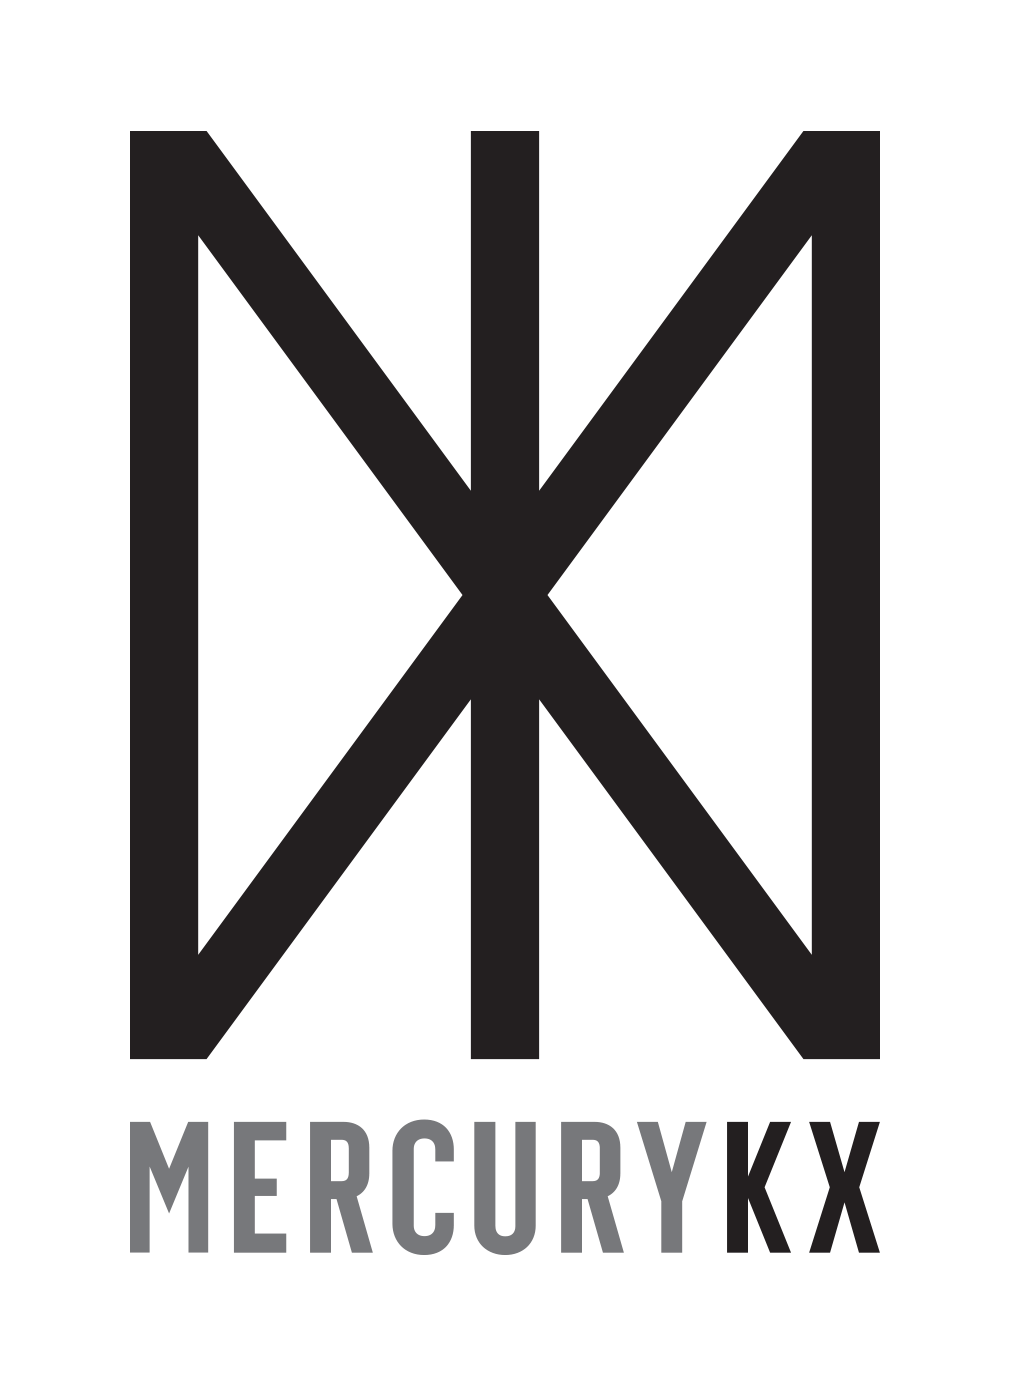 Mercury KX logo